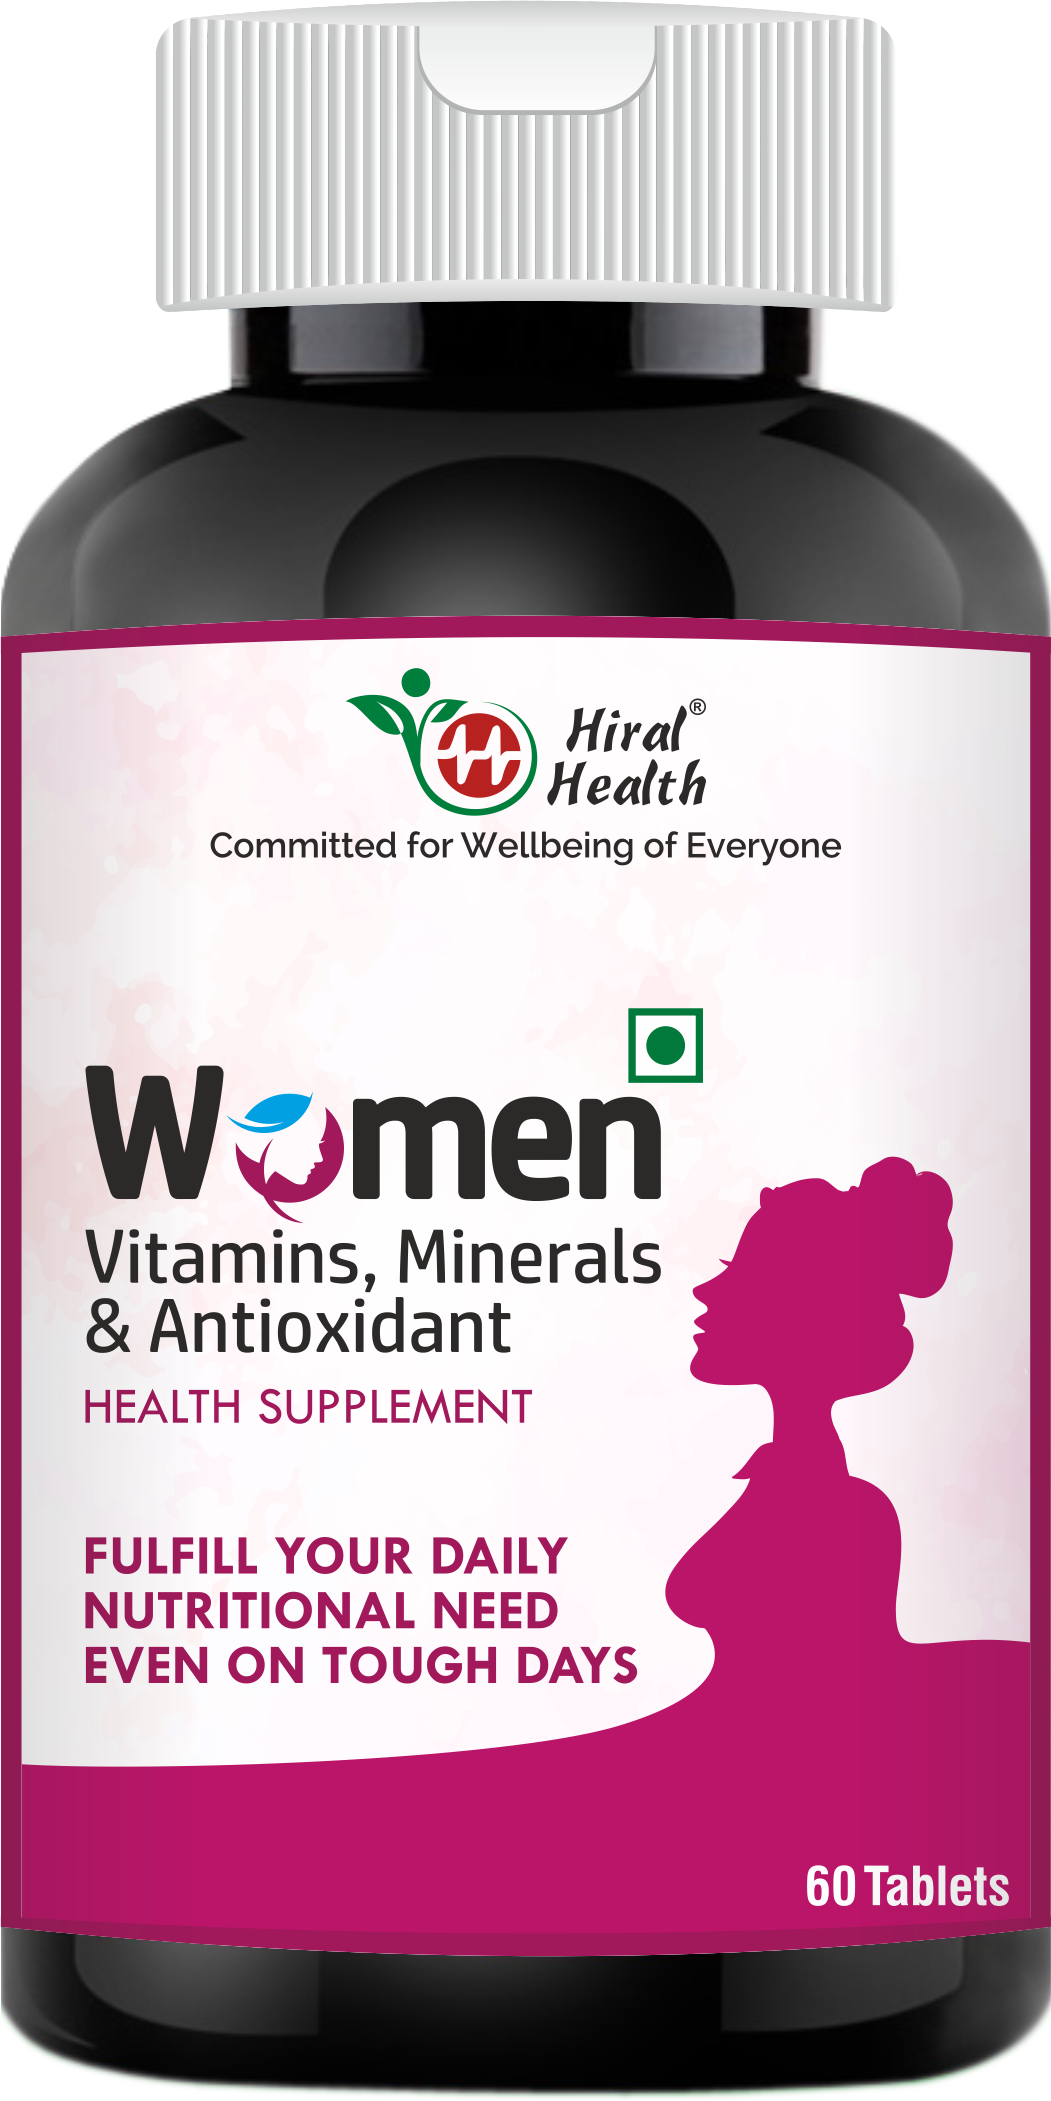 Women multivitamin for women overall health